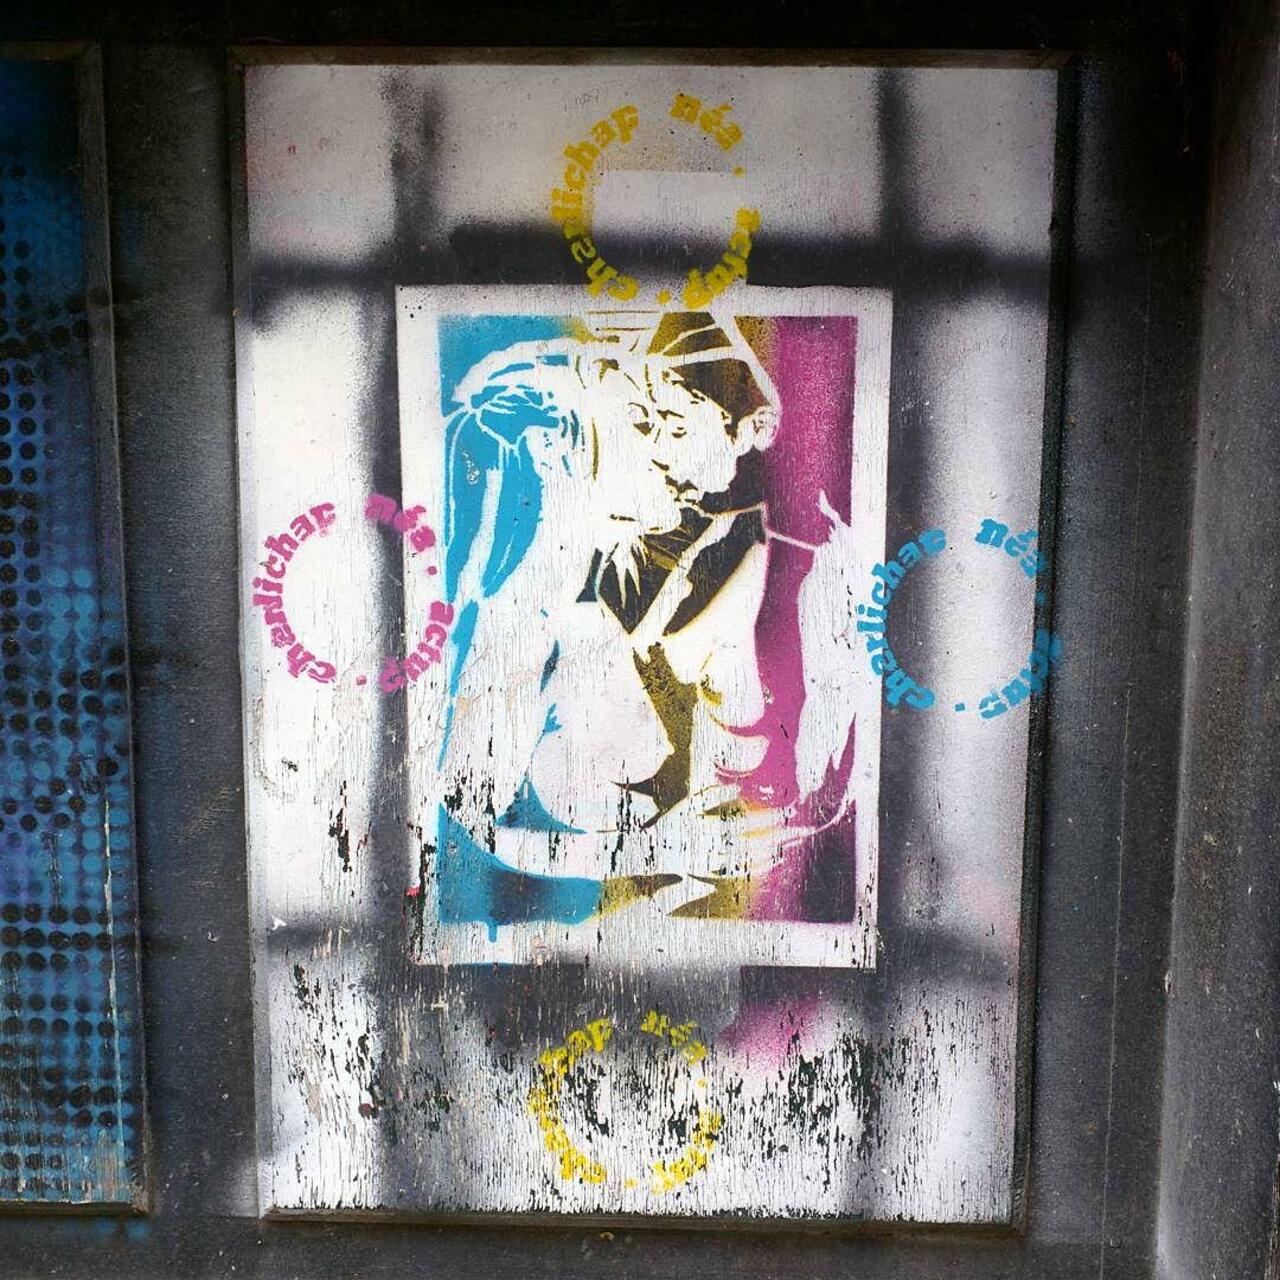 #Paris #graffiti photo by @alphaquadra http://ift.tt/1Lkr59C #StreetArt http://t.co/eStPvJlNSg